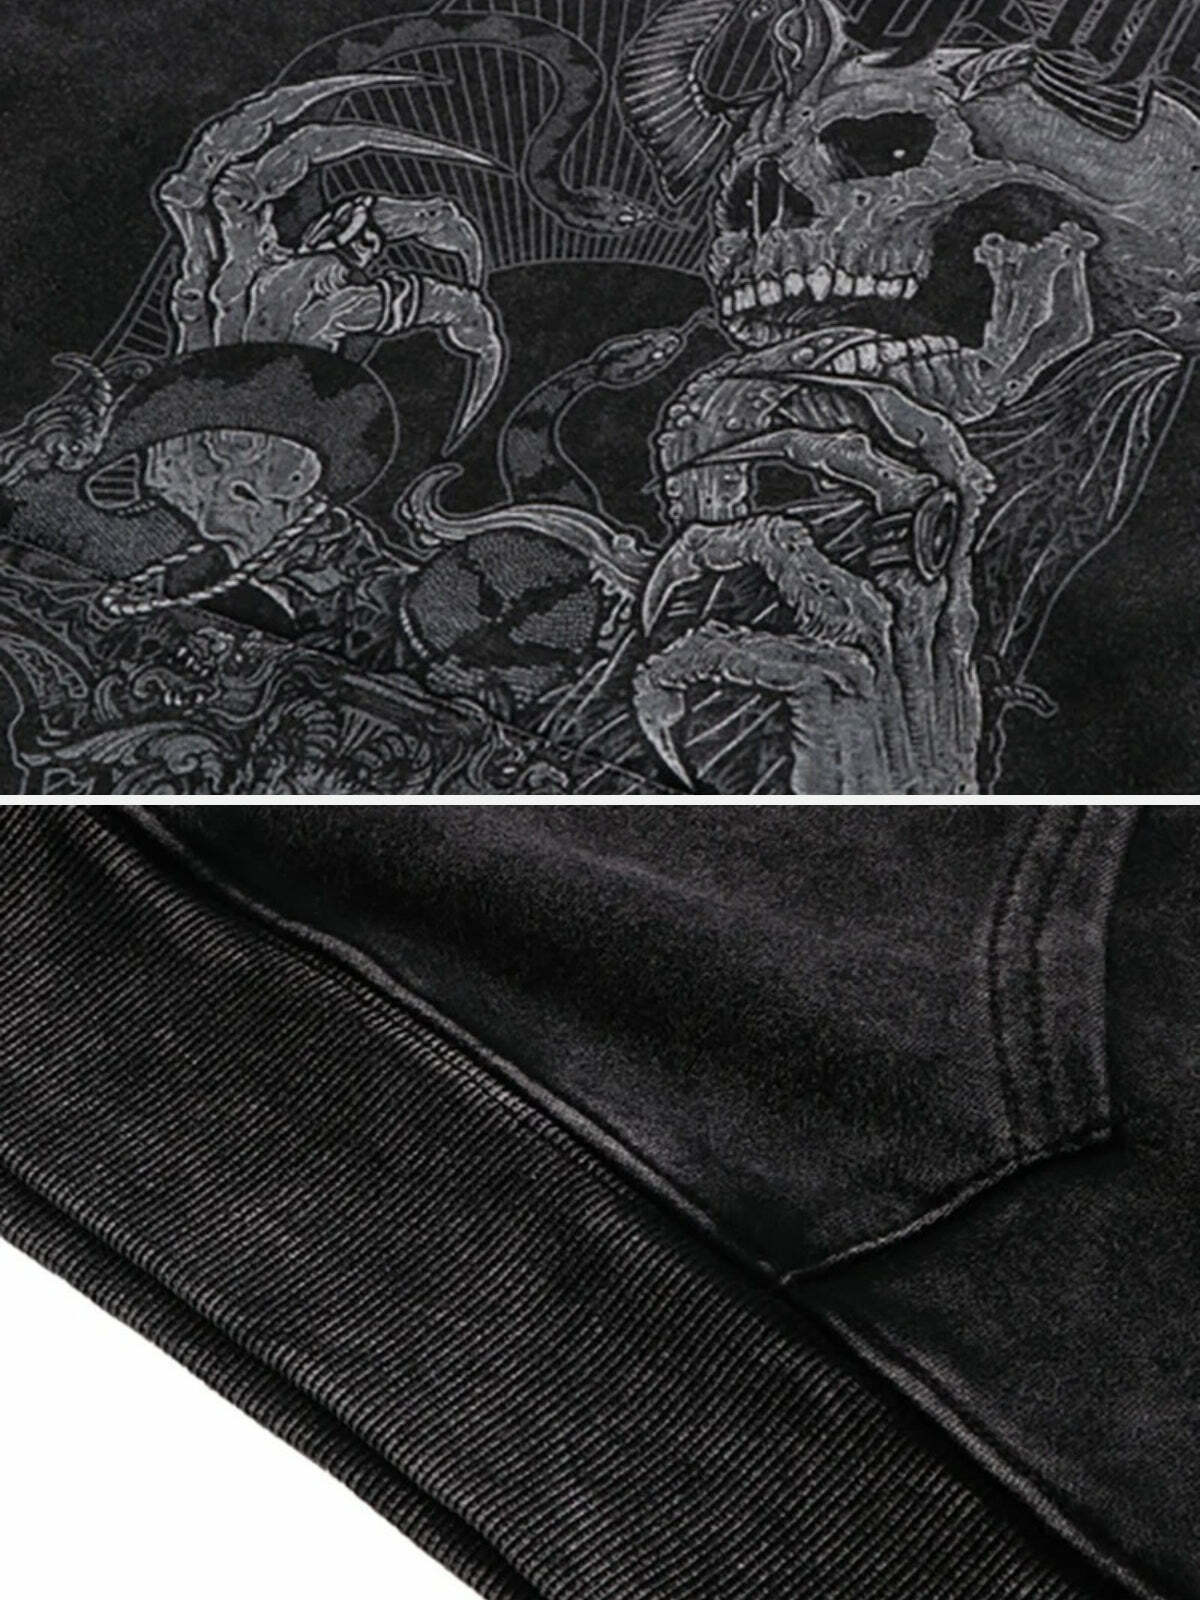 graphic skull devil hoodie edgy streetwear statement 1335